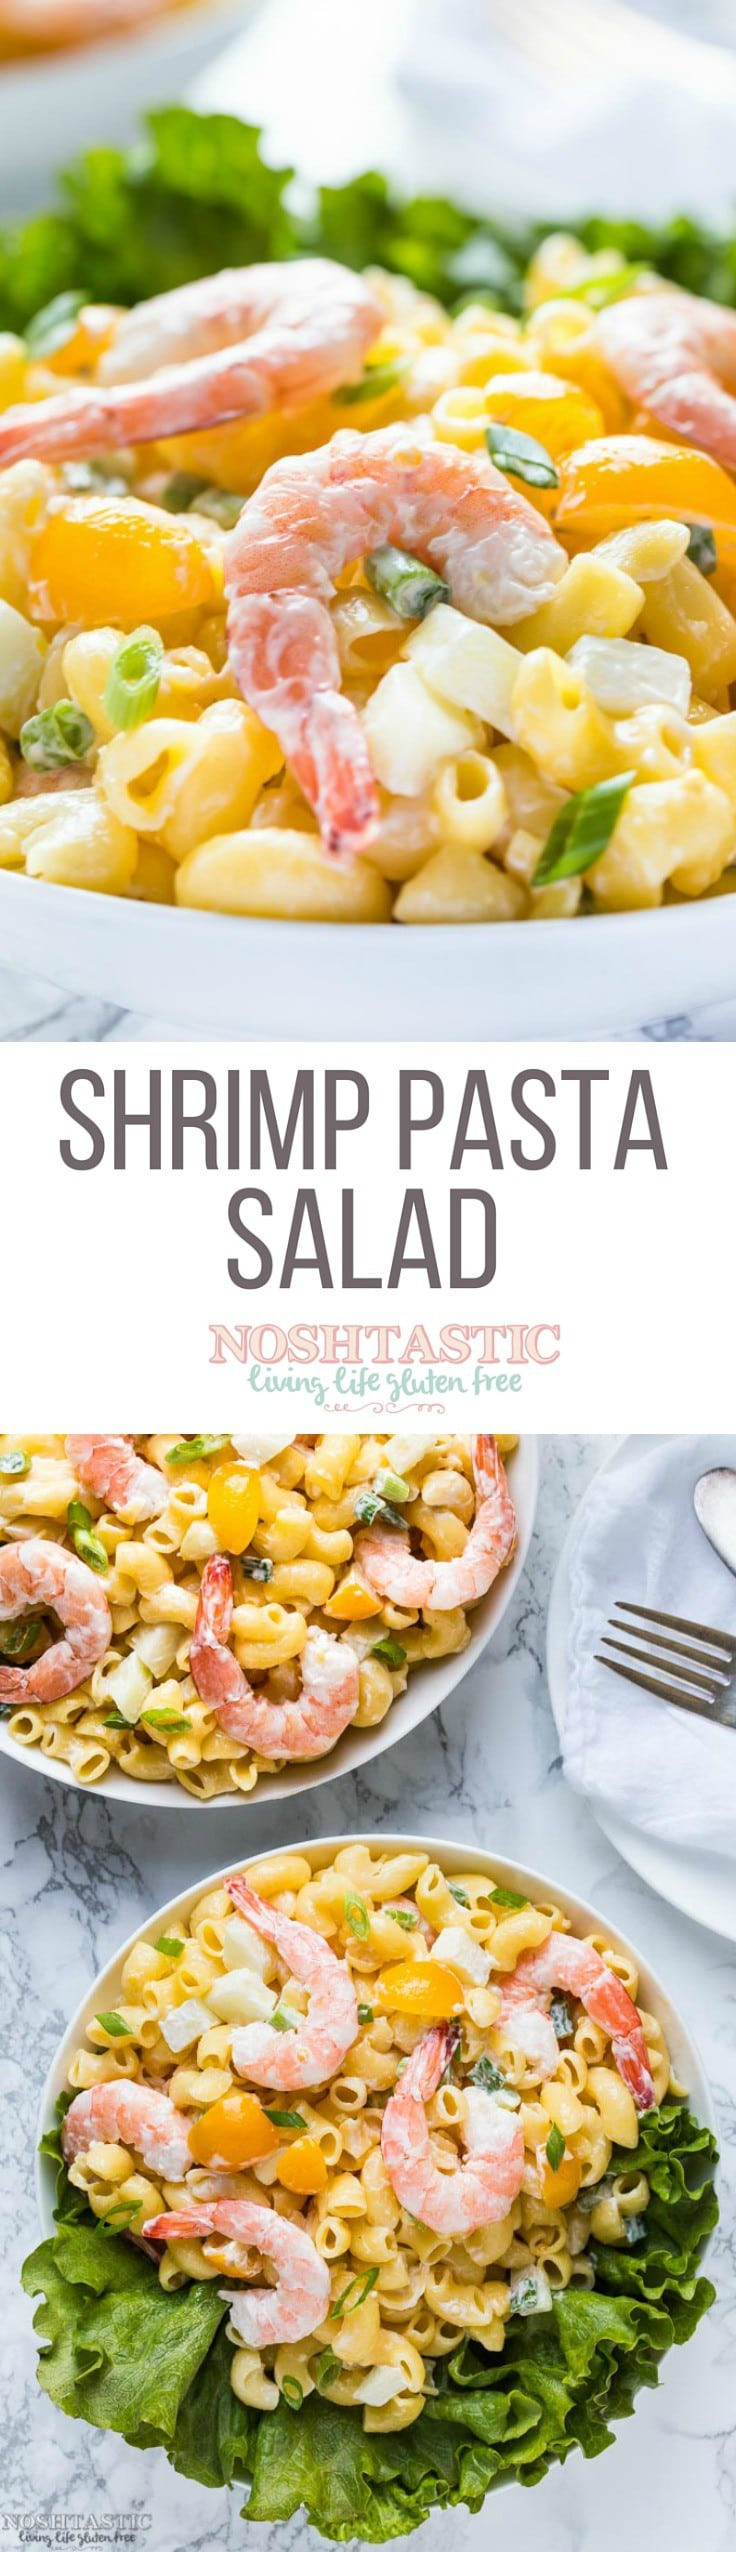 Cold Shrimp Pasta Salad No Mayo
 Shrimp And Cucumber Salad With Horseradish Mayo Recipe